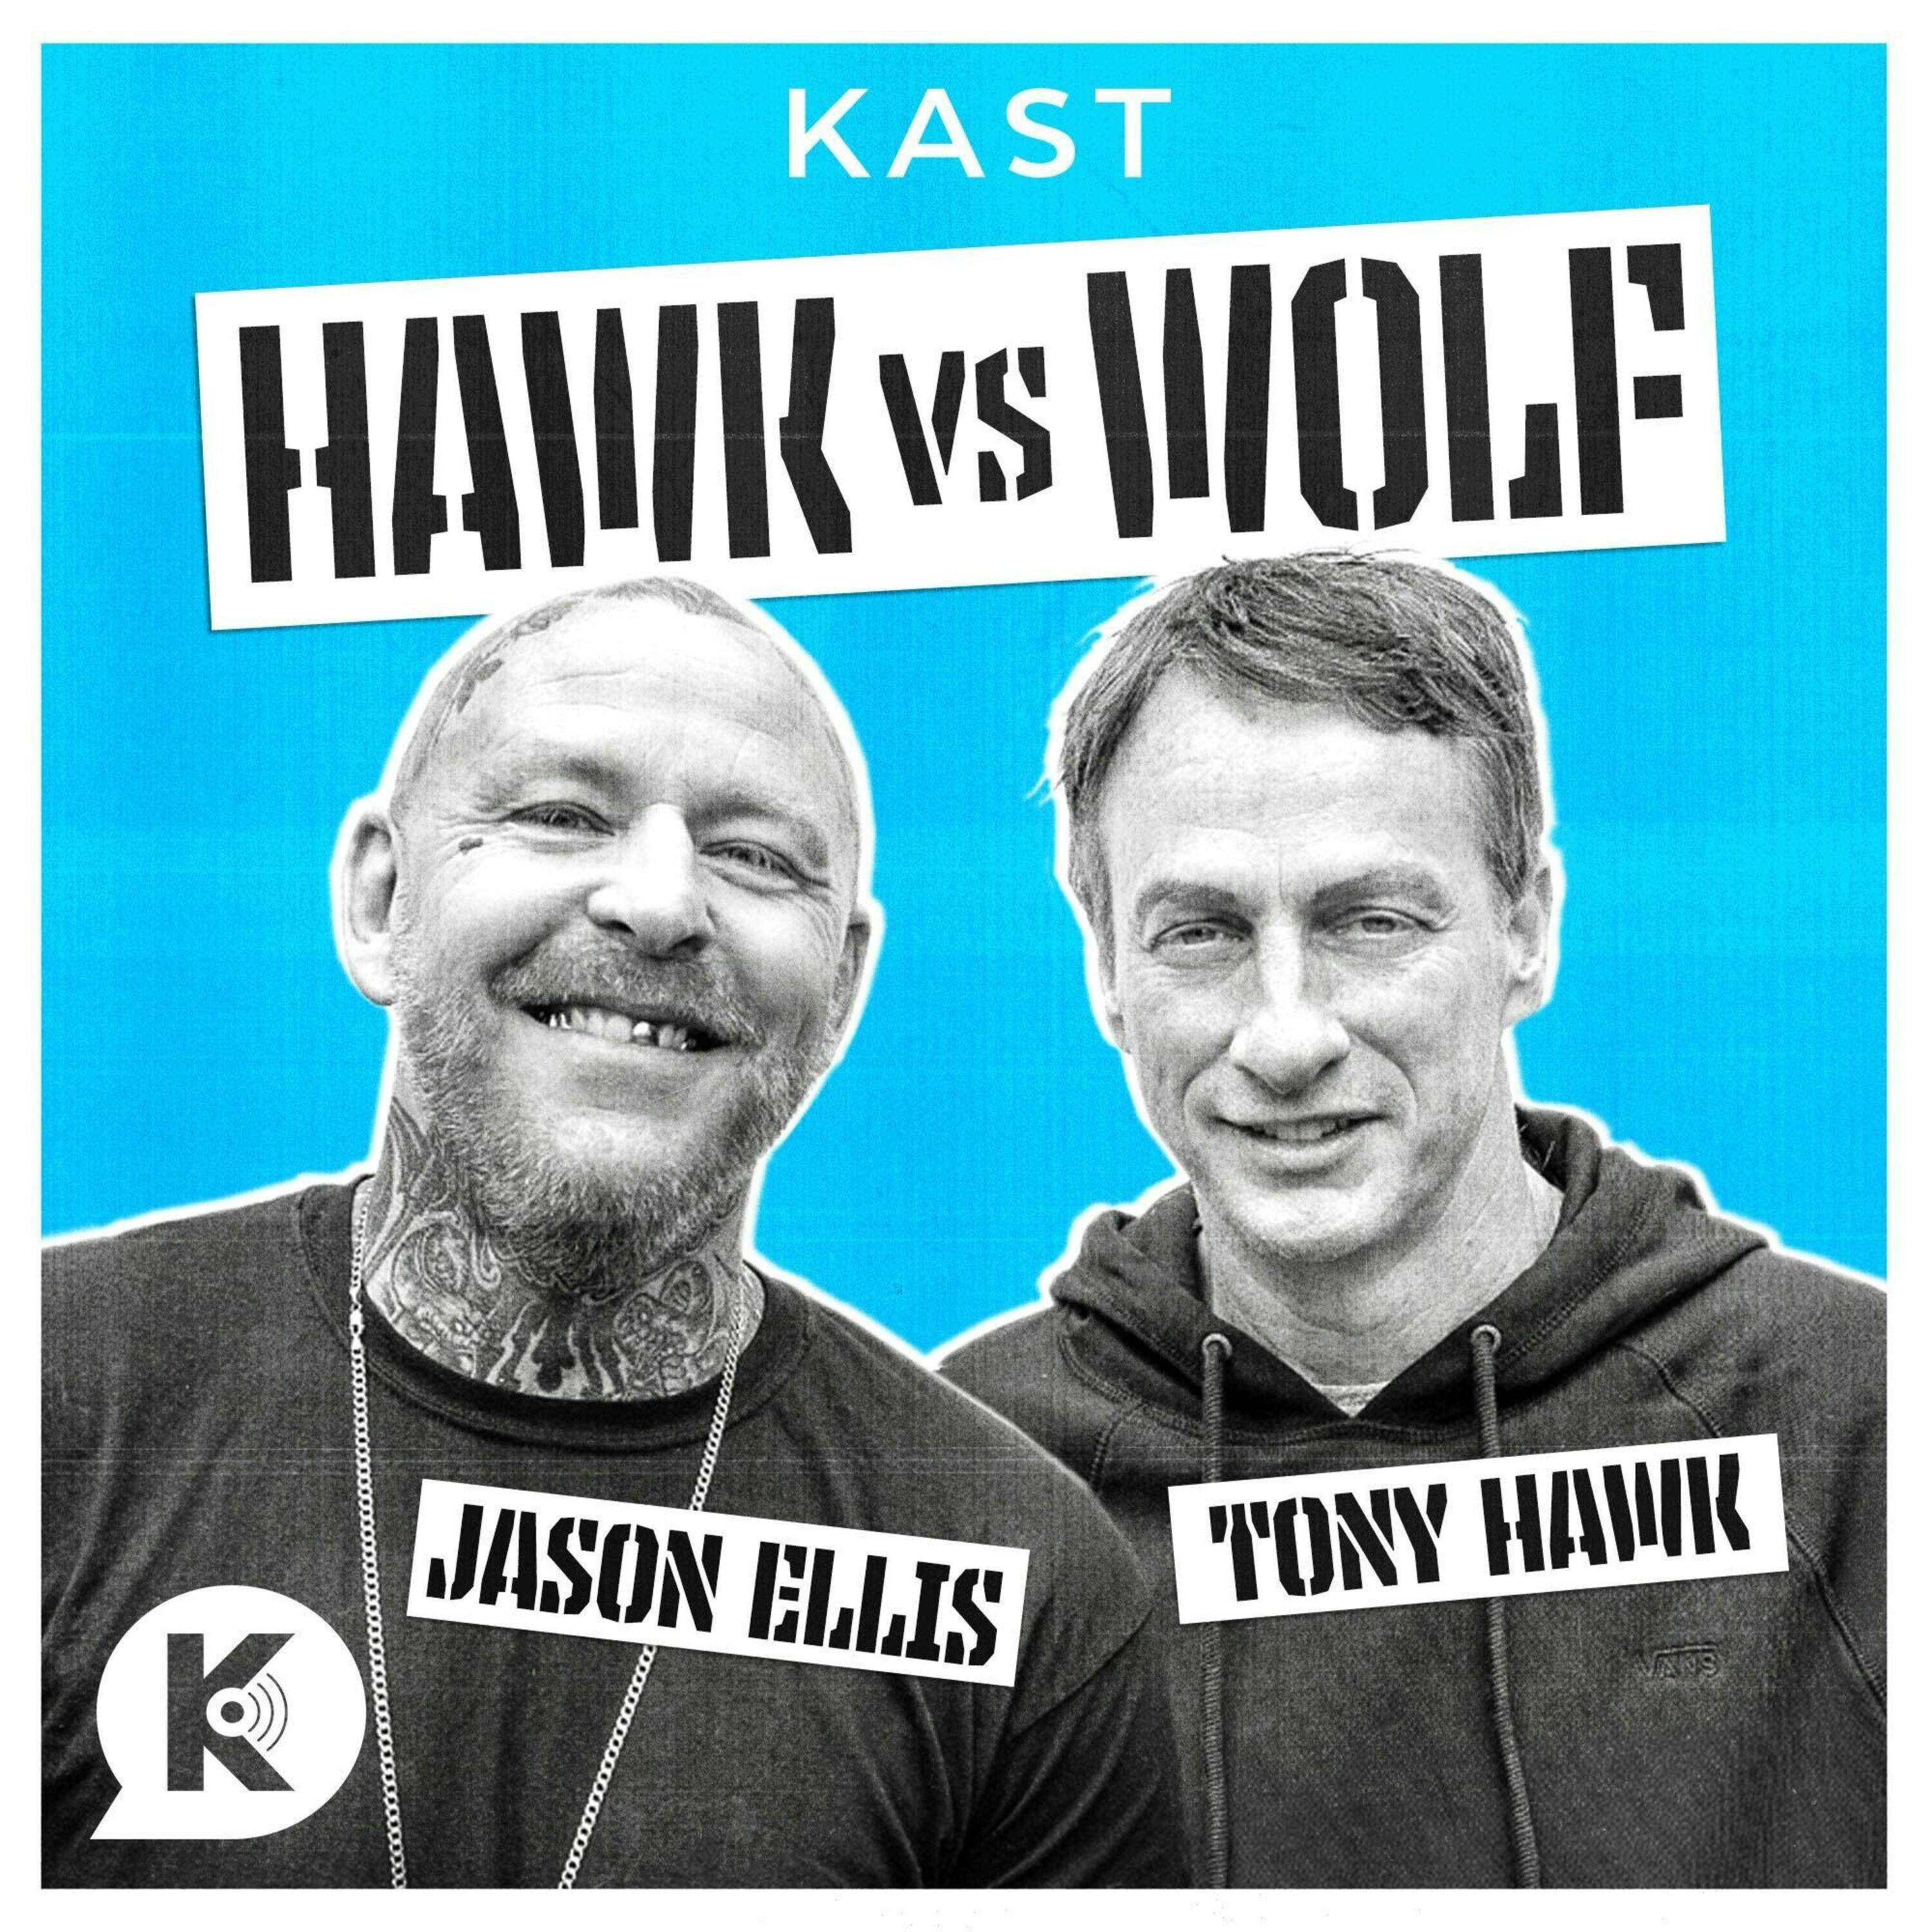 Tony Hawk Gives Skating Advice & Jason Ellis Meets Russell Crowe!